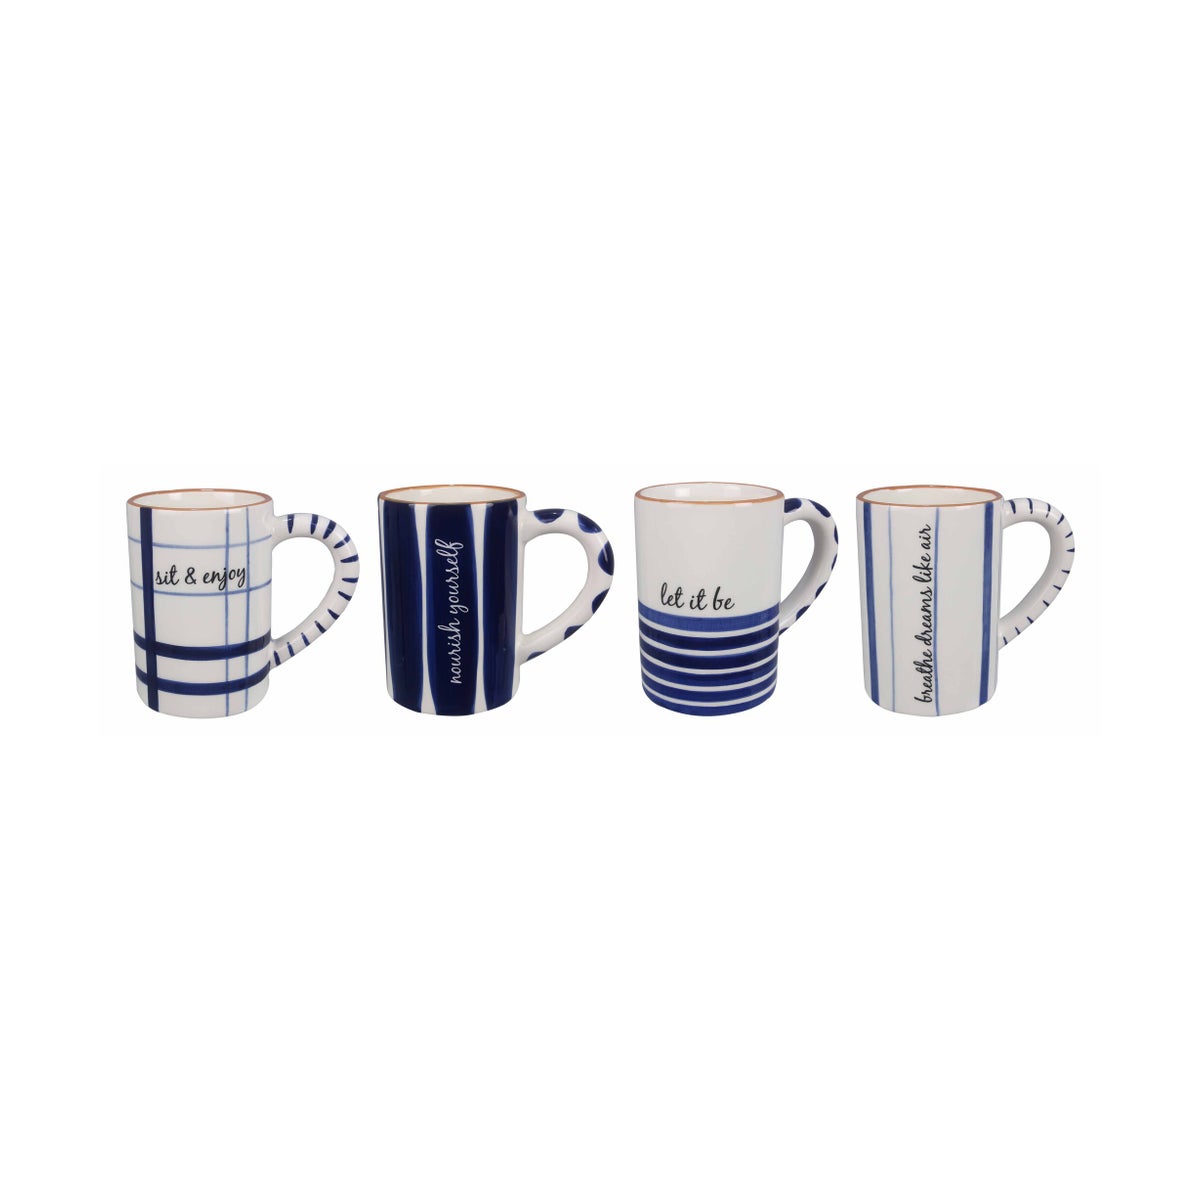 Ceramic Blue and White Mugs, 4 Assorted